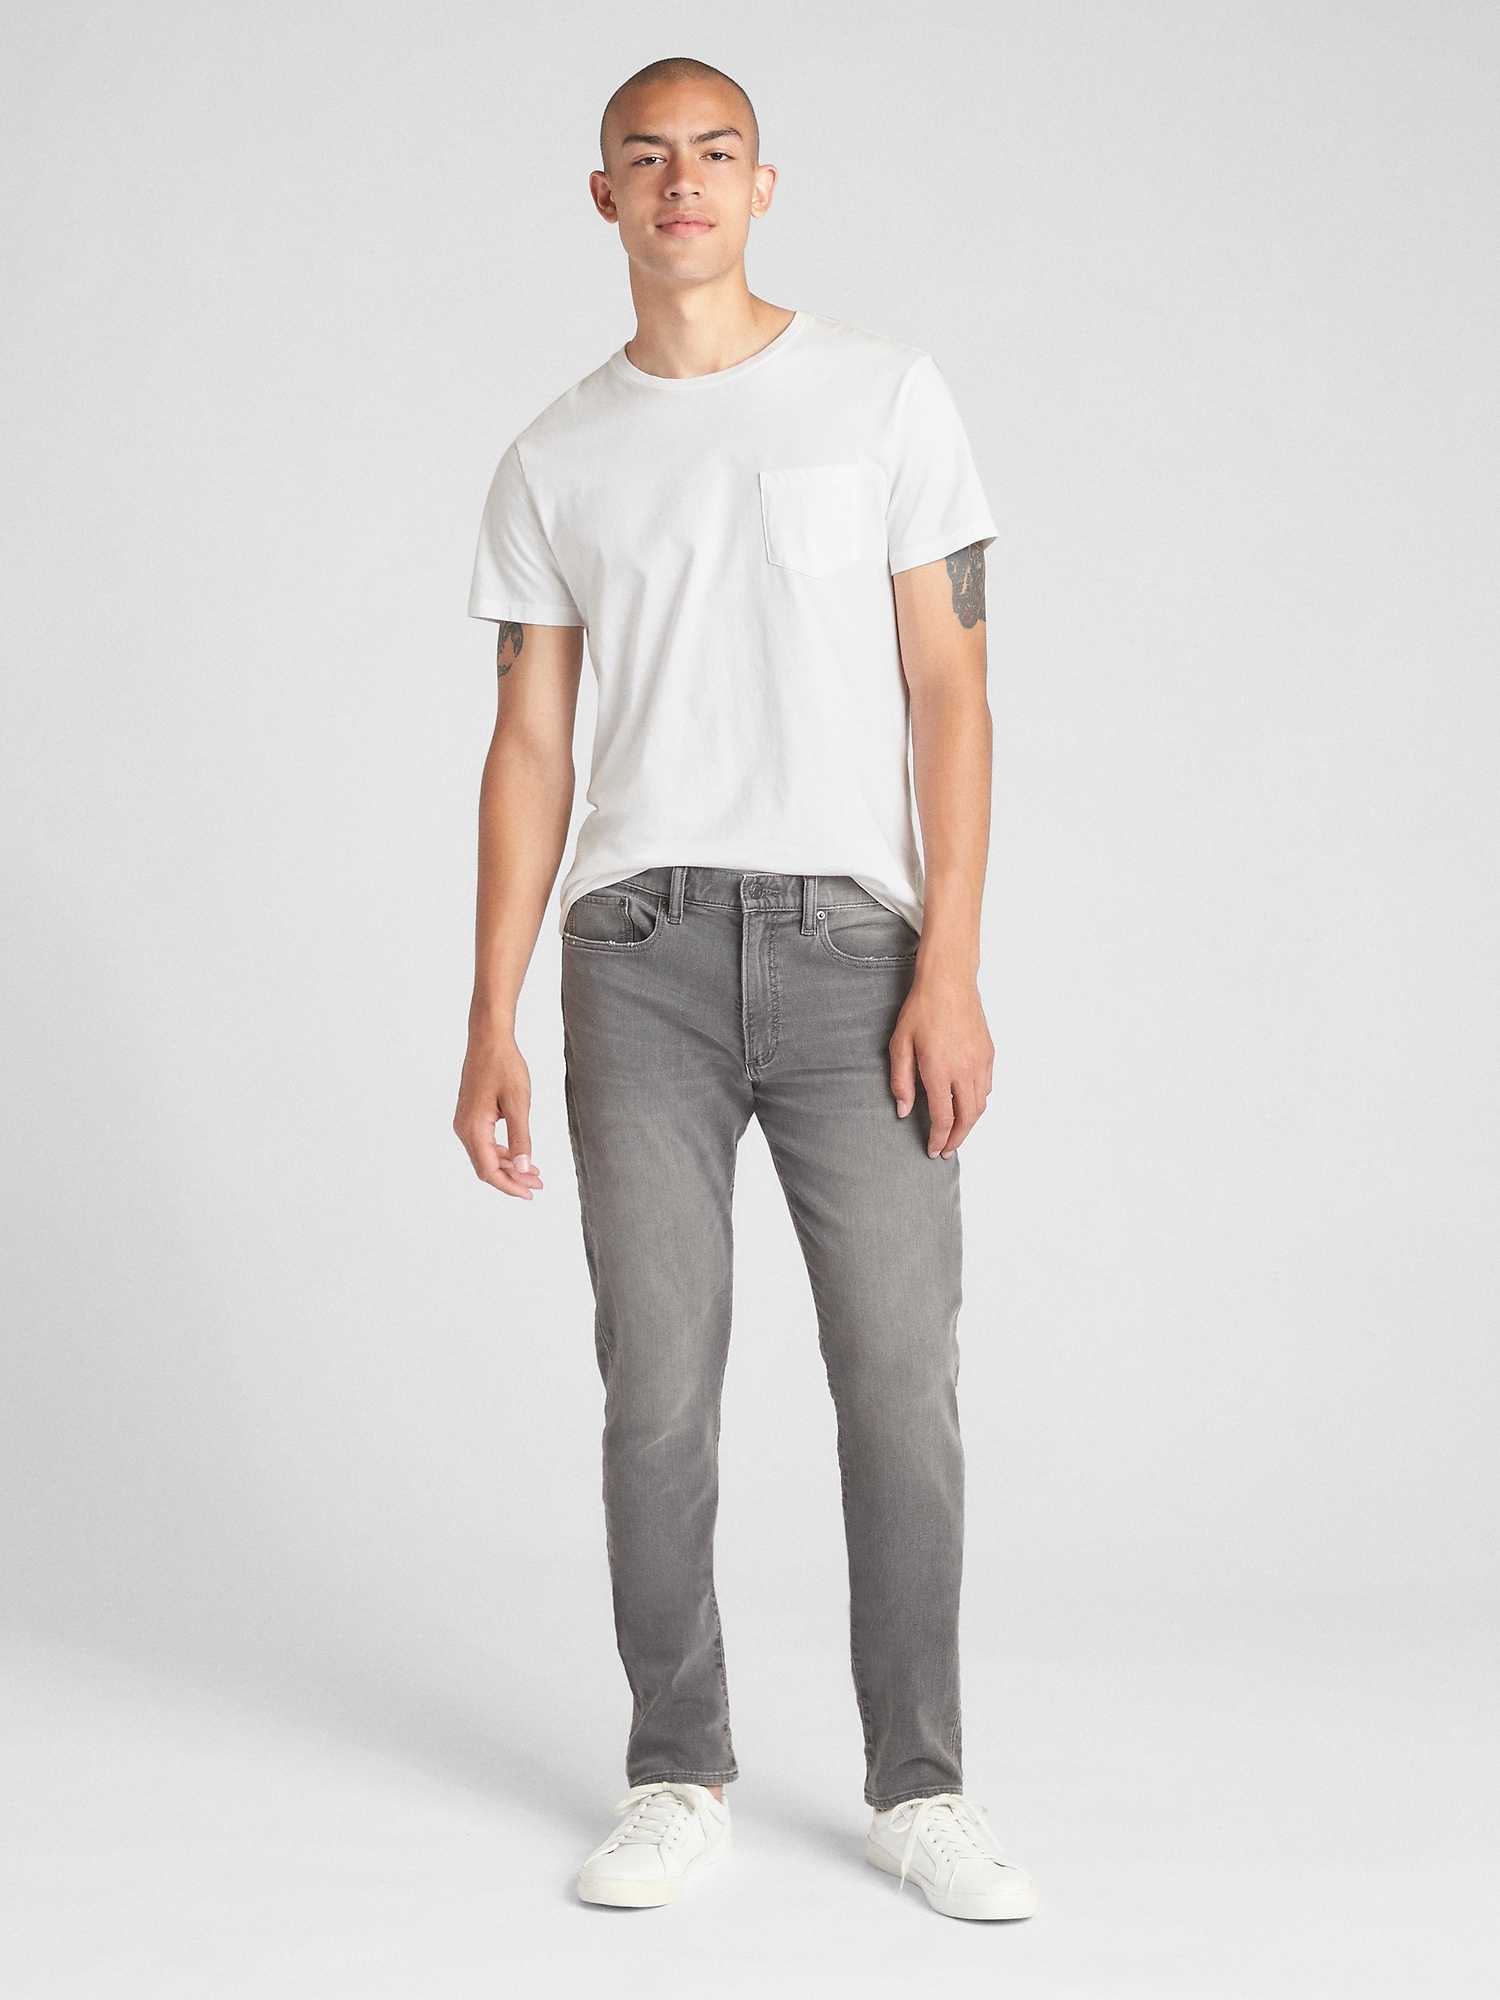 GAP Soft Wear Slim Fit Jeans with GapFlex